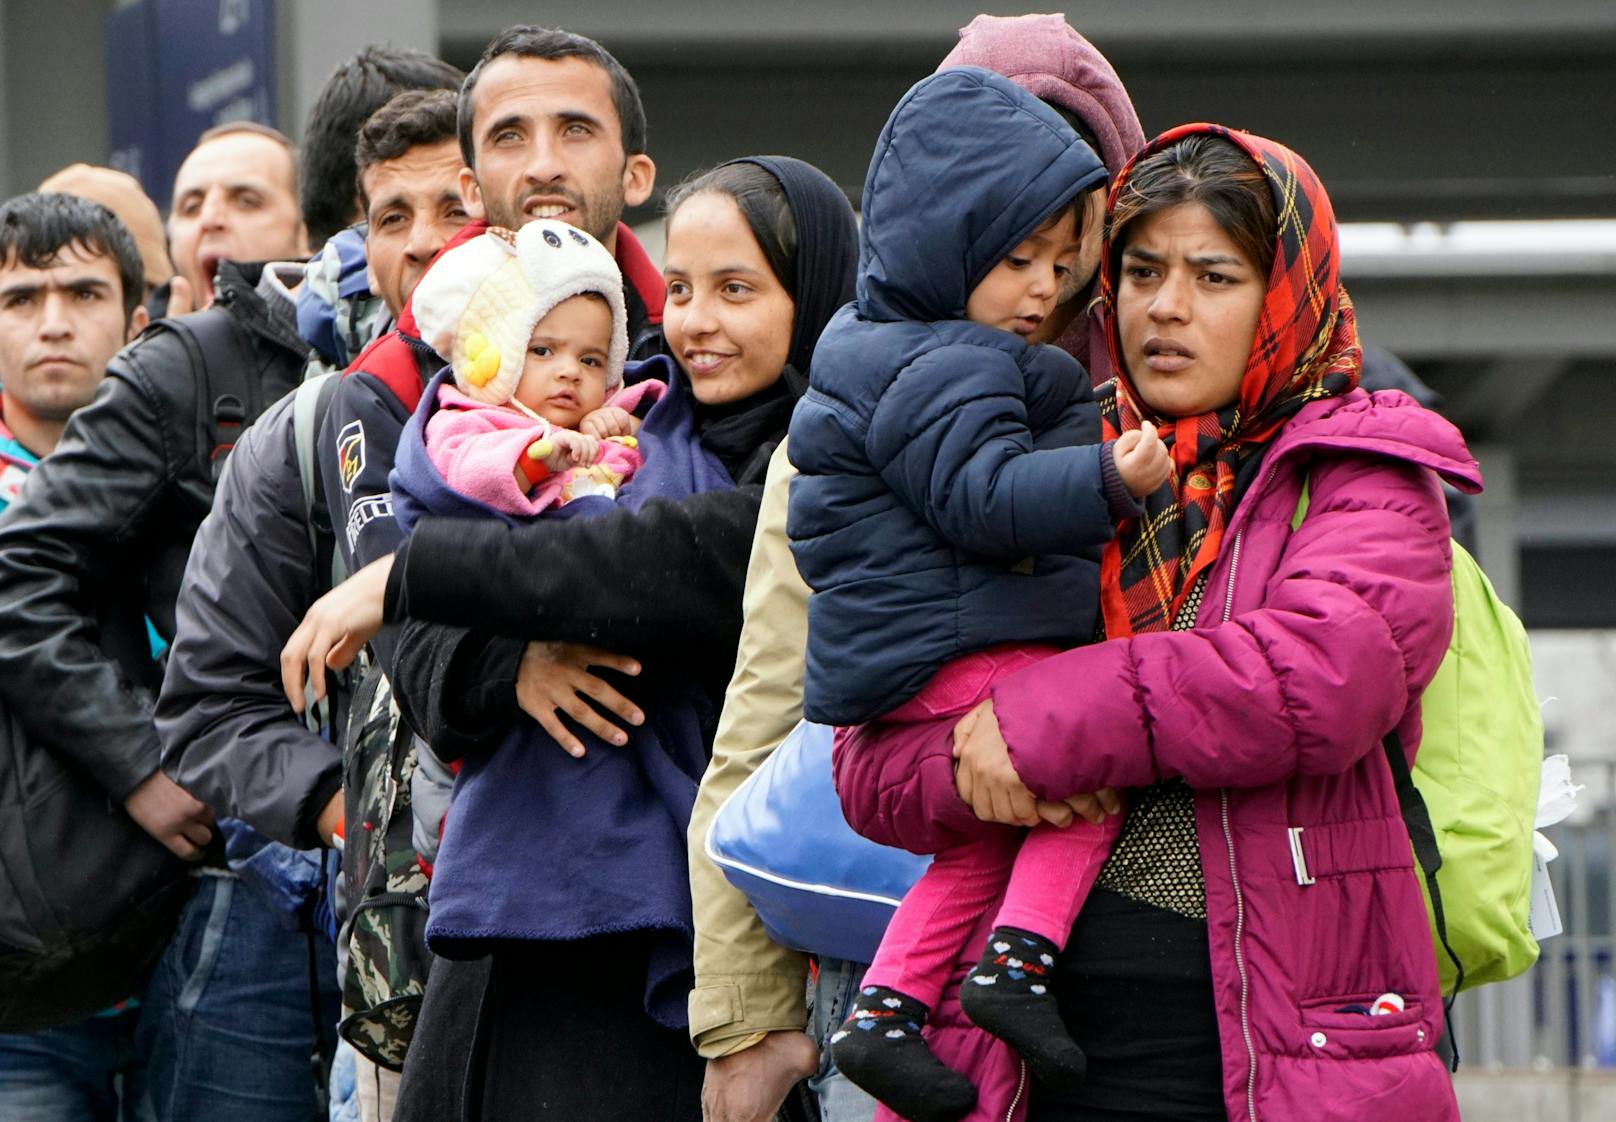 FPÖ schlägt Alarm: "So viele Asylanträge wie noch nie!"